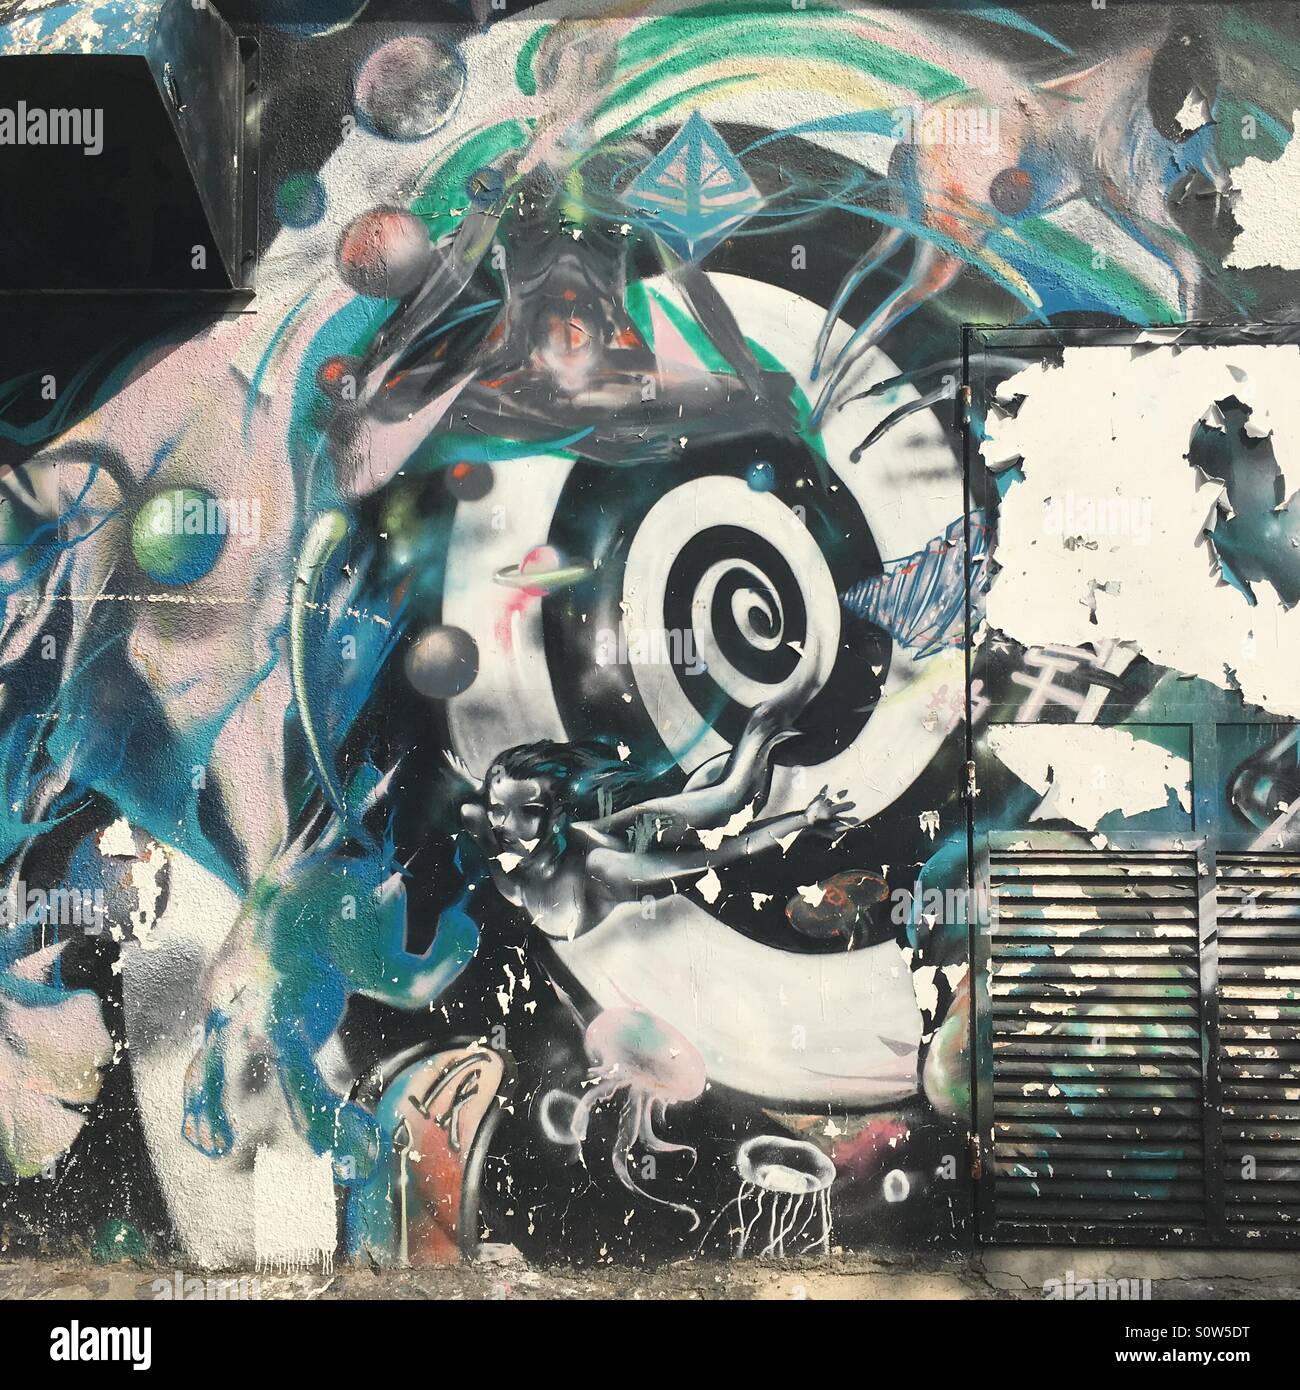 Graffiti Street Art Mural - Shenzhen China Stock Photo